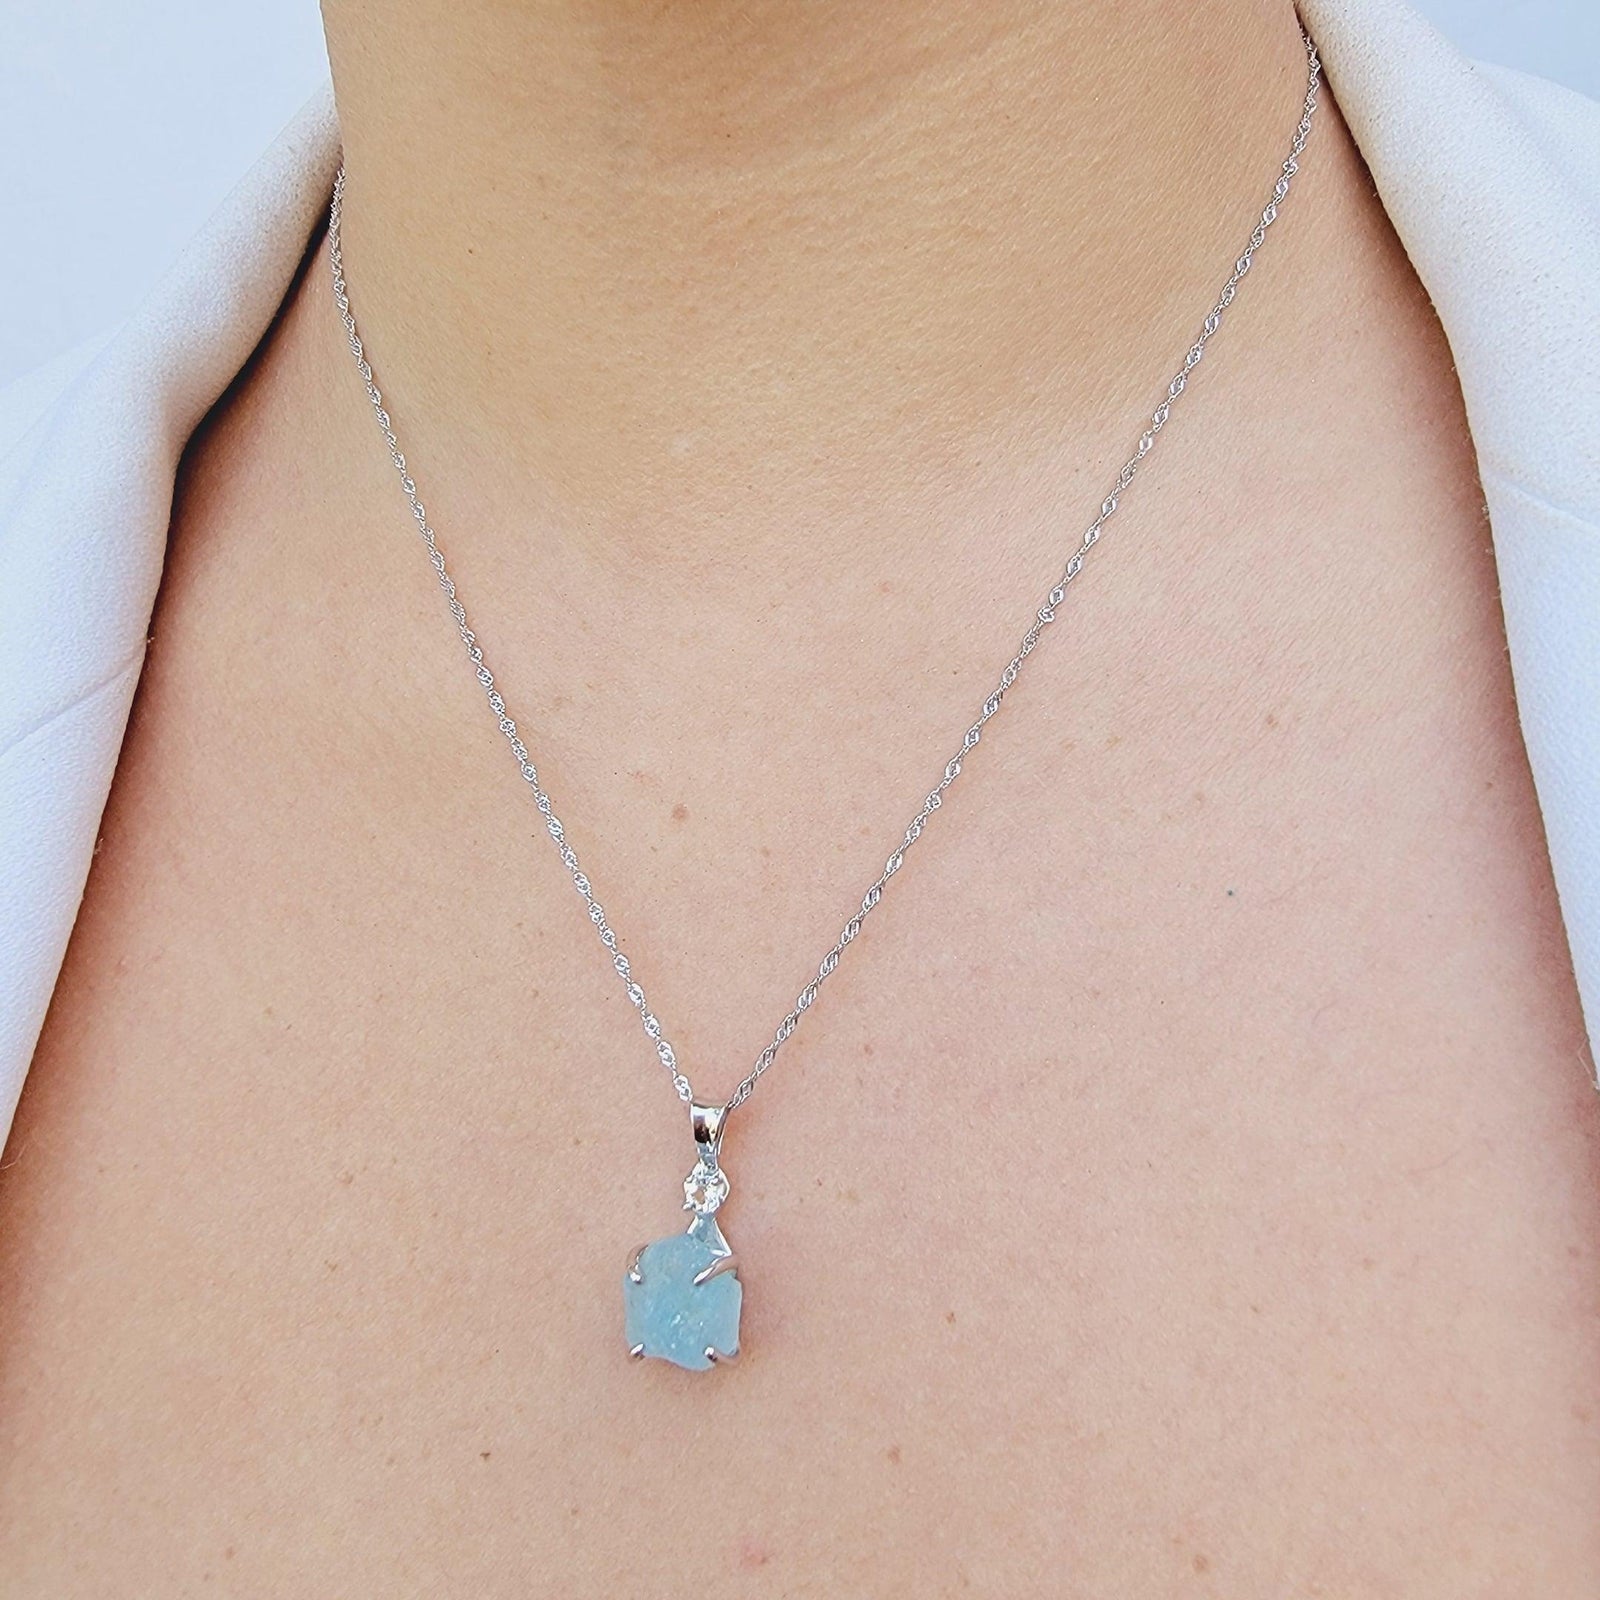 Aquamarine melon pendant necklace silver chain for women – Kiri Kiri